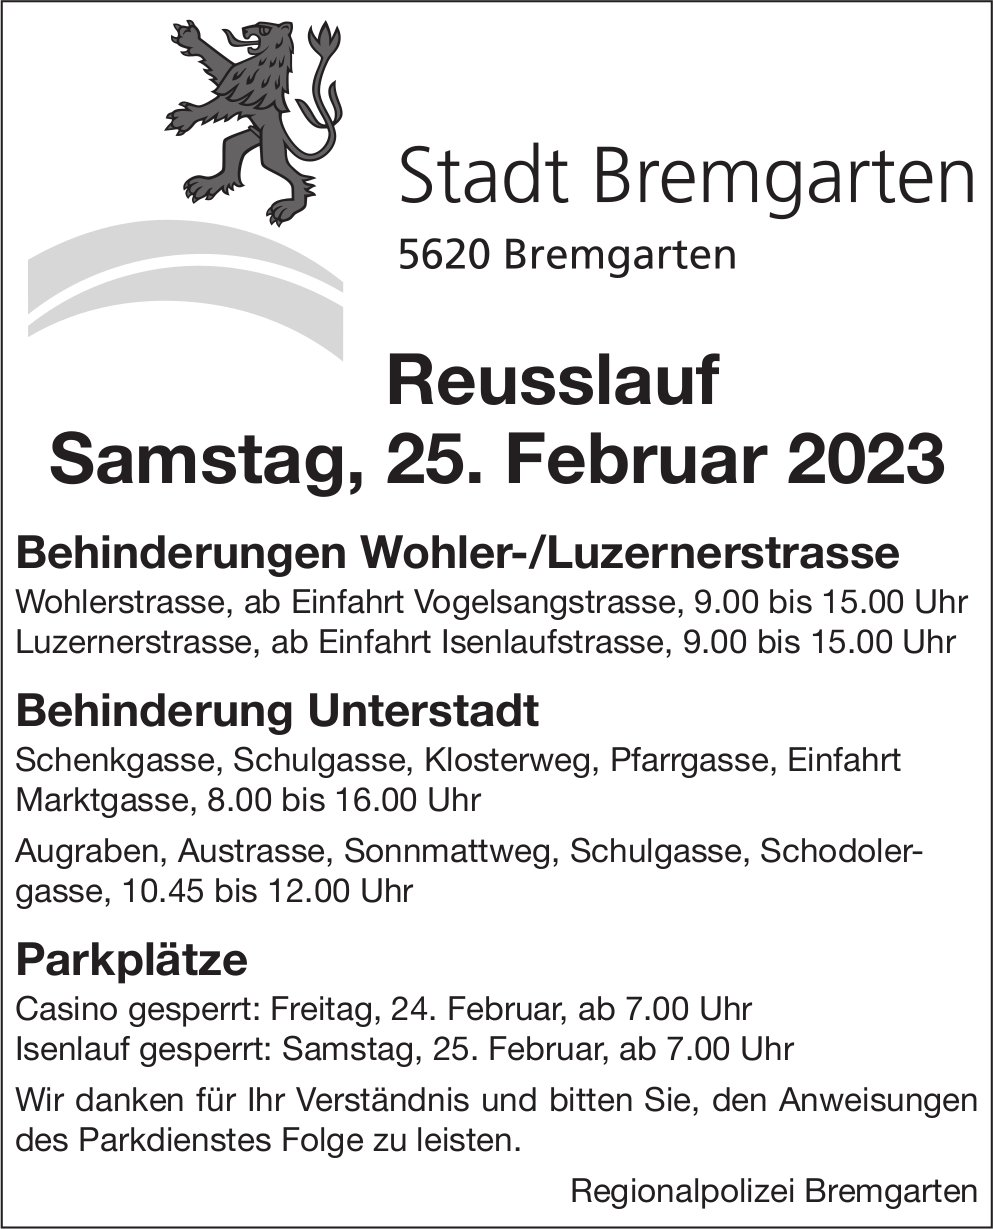 Bremgarten - Reusslauf, 25. Februar